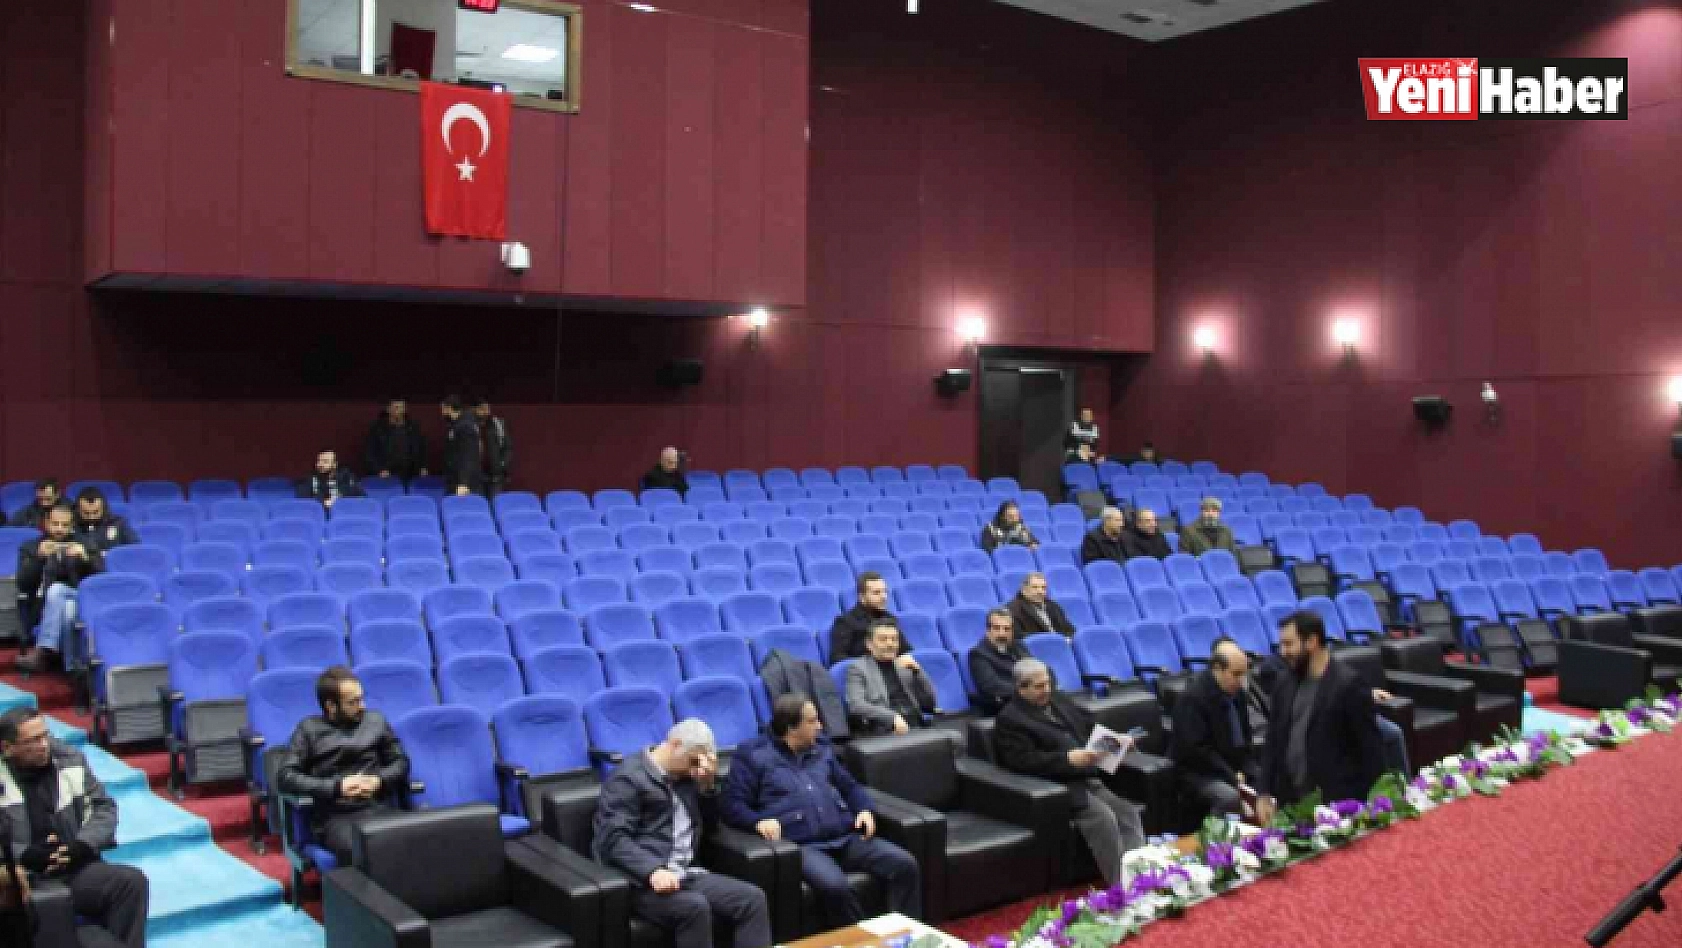 Elazığspor'da Mali Genel Kurul, 30 Mayıs'ta